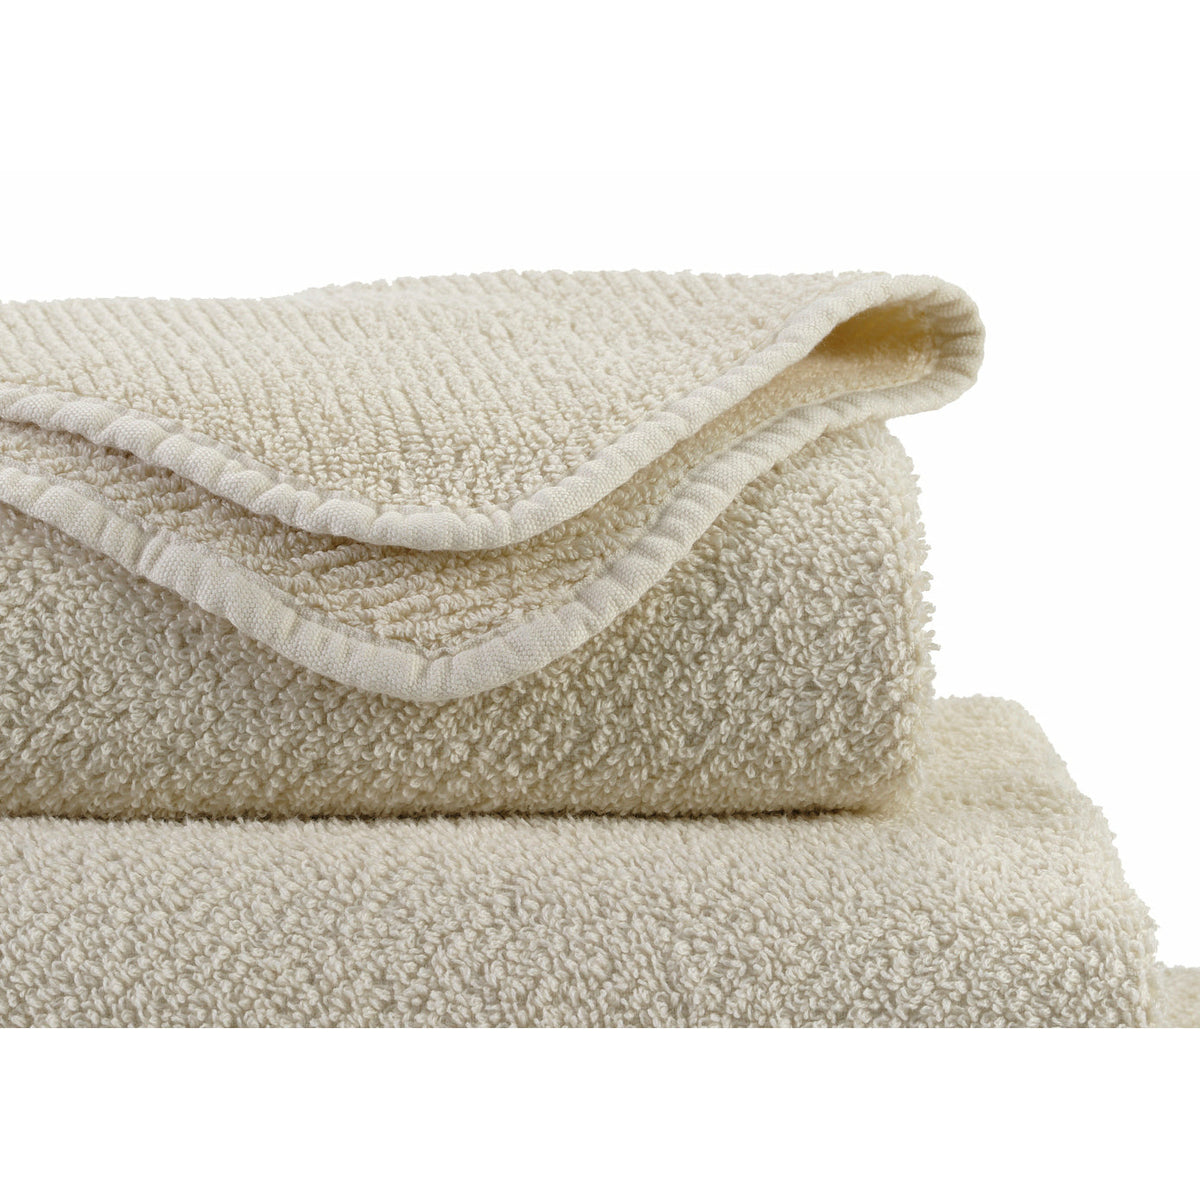 Abyss Super Pile Towels - Hand Towel 17x30 Ecru 101